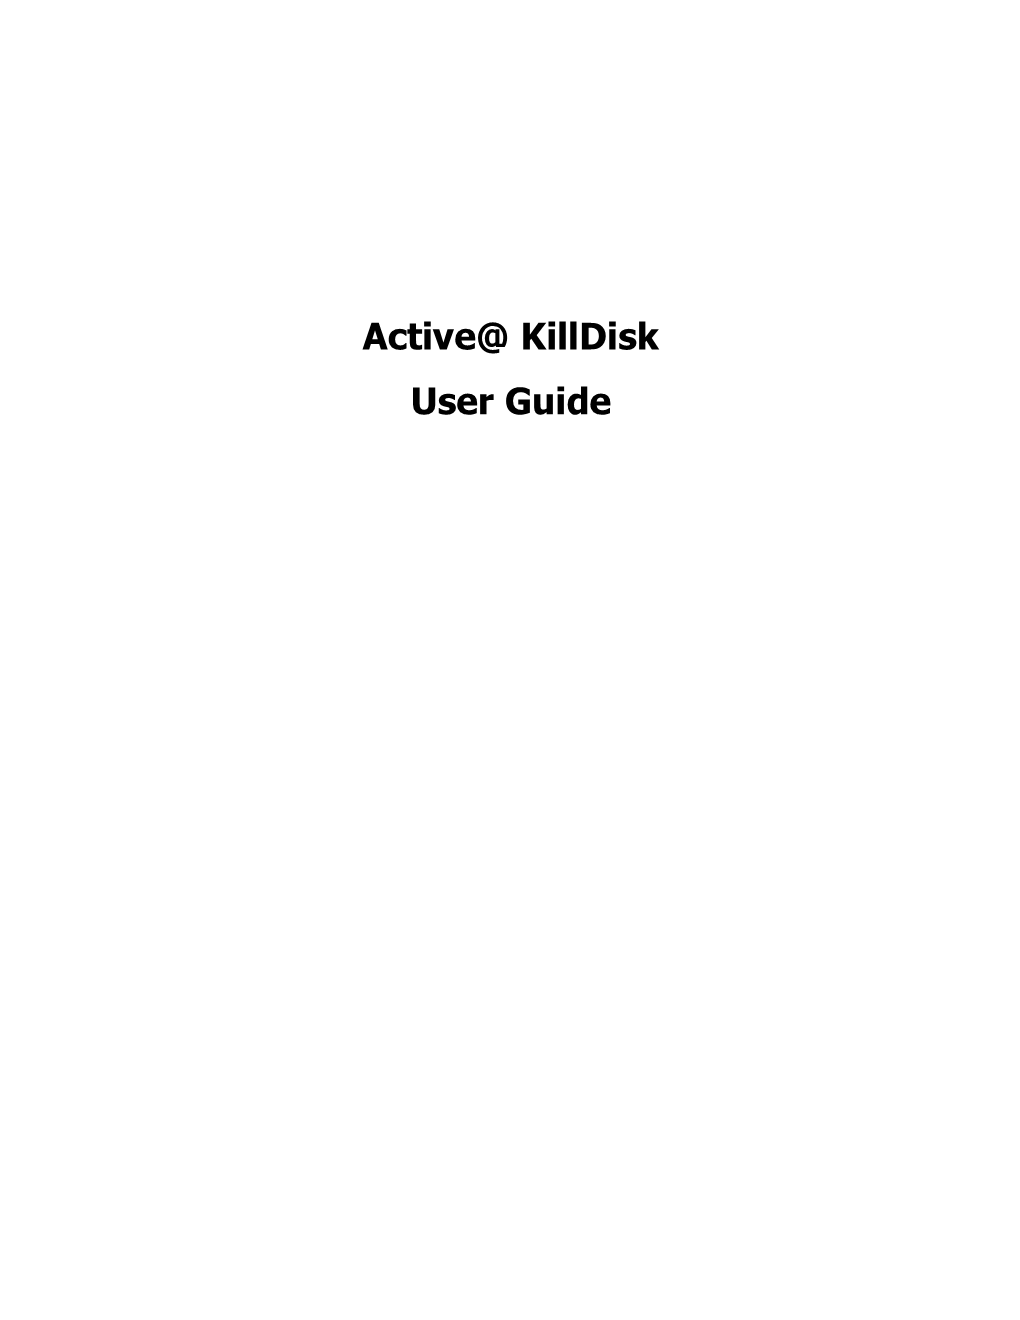 Active@ Killdisk User Guide Copyright © 1999-2015, LSOFT TECHNOLOGIES INC